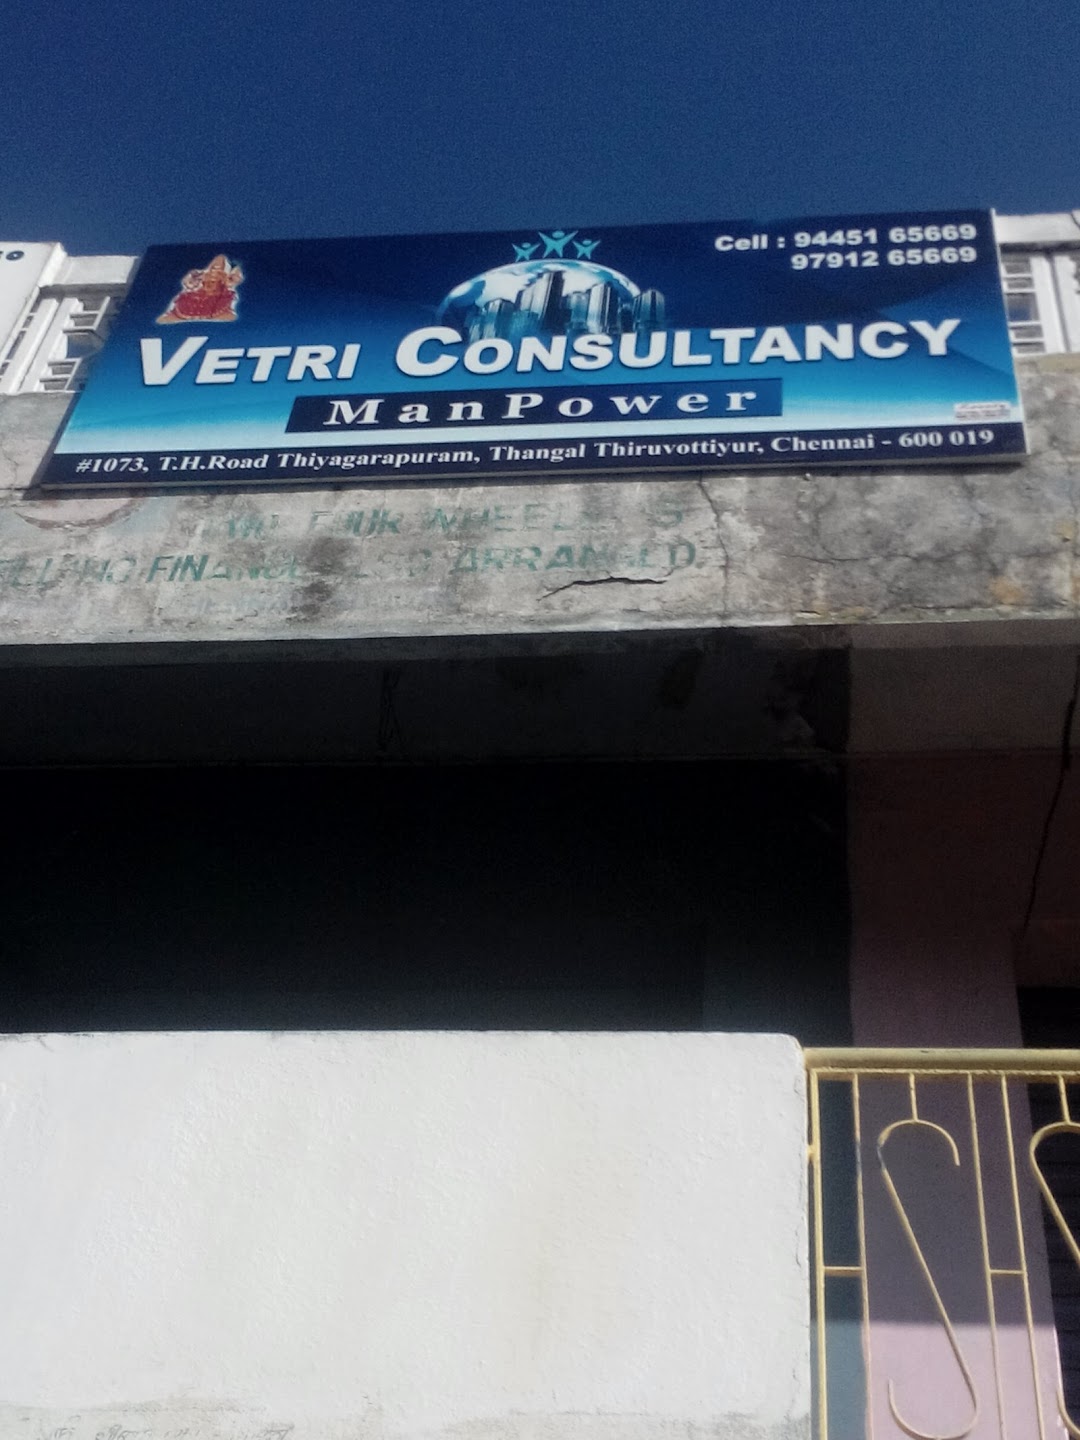 Vetri Consultancy